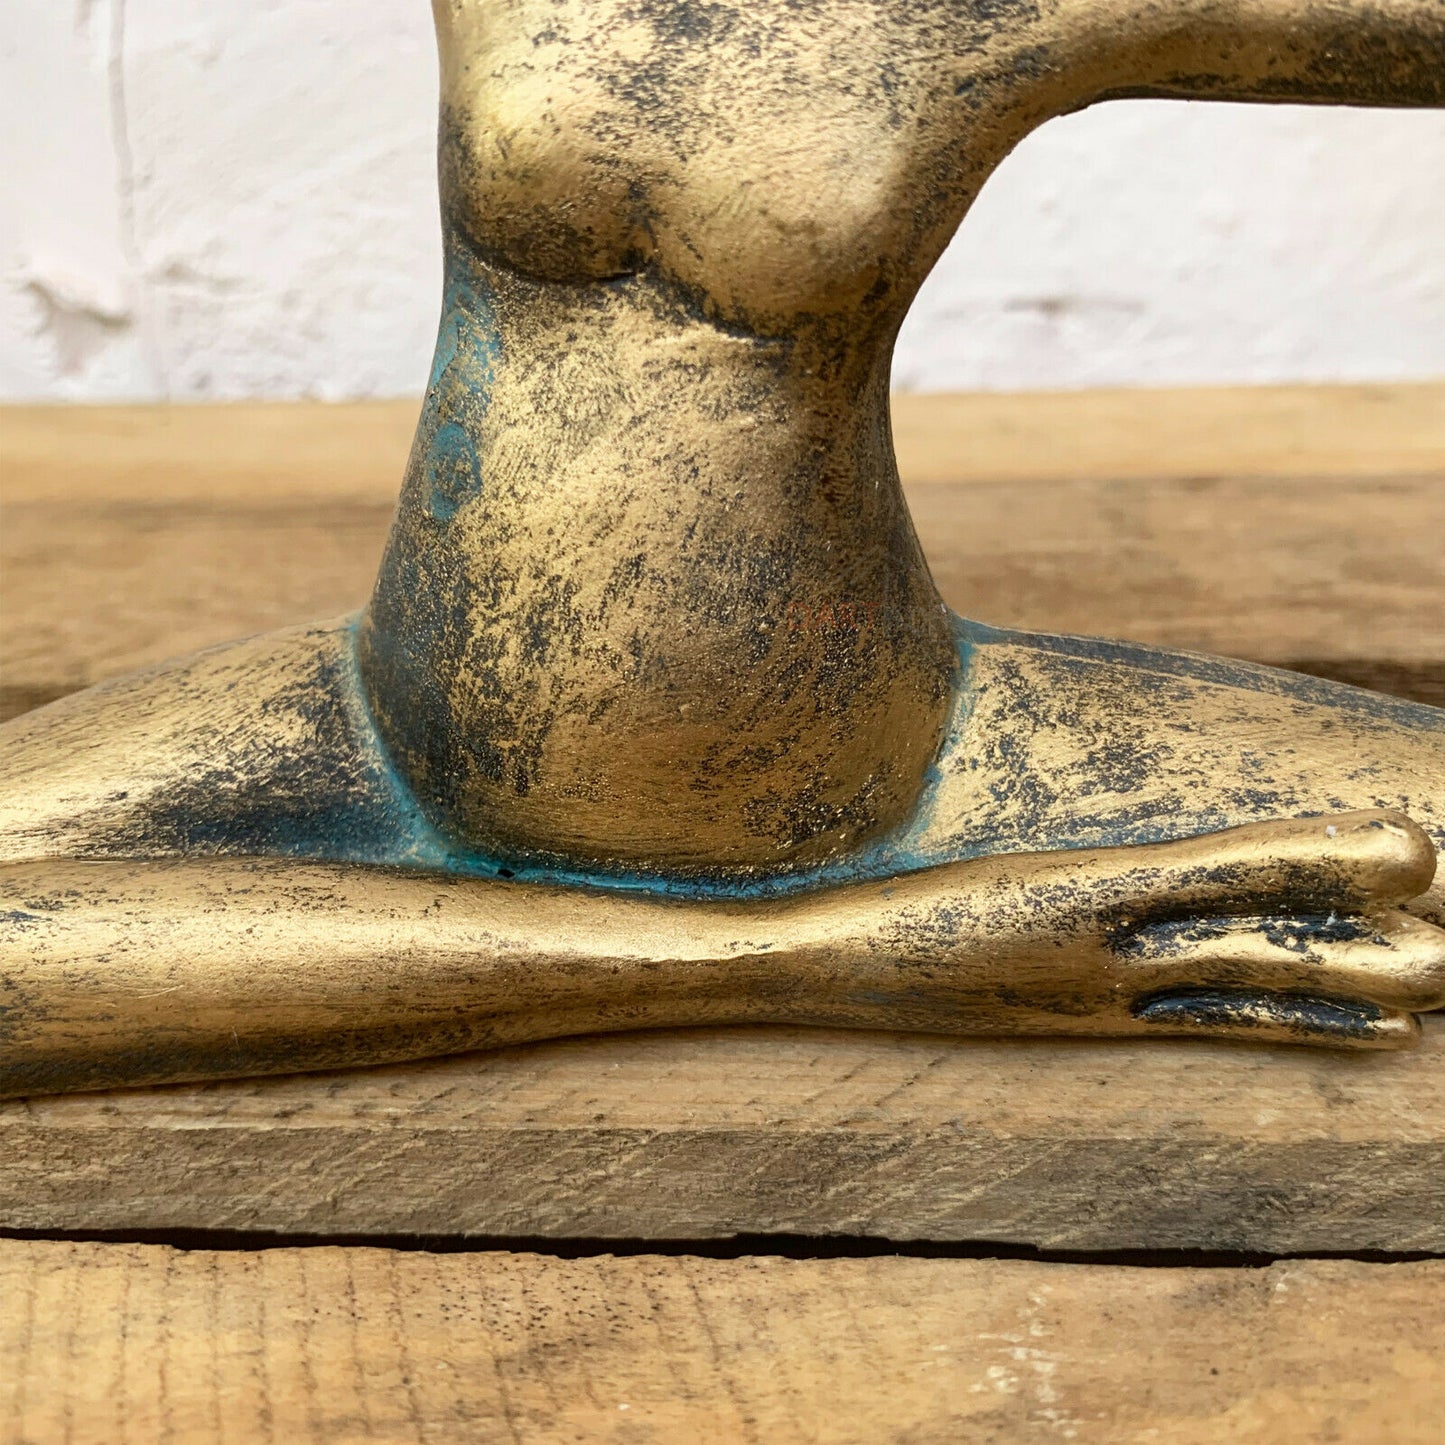 Goldenes Yoga-Frosch-Ornament, 17 cm